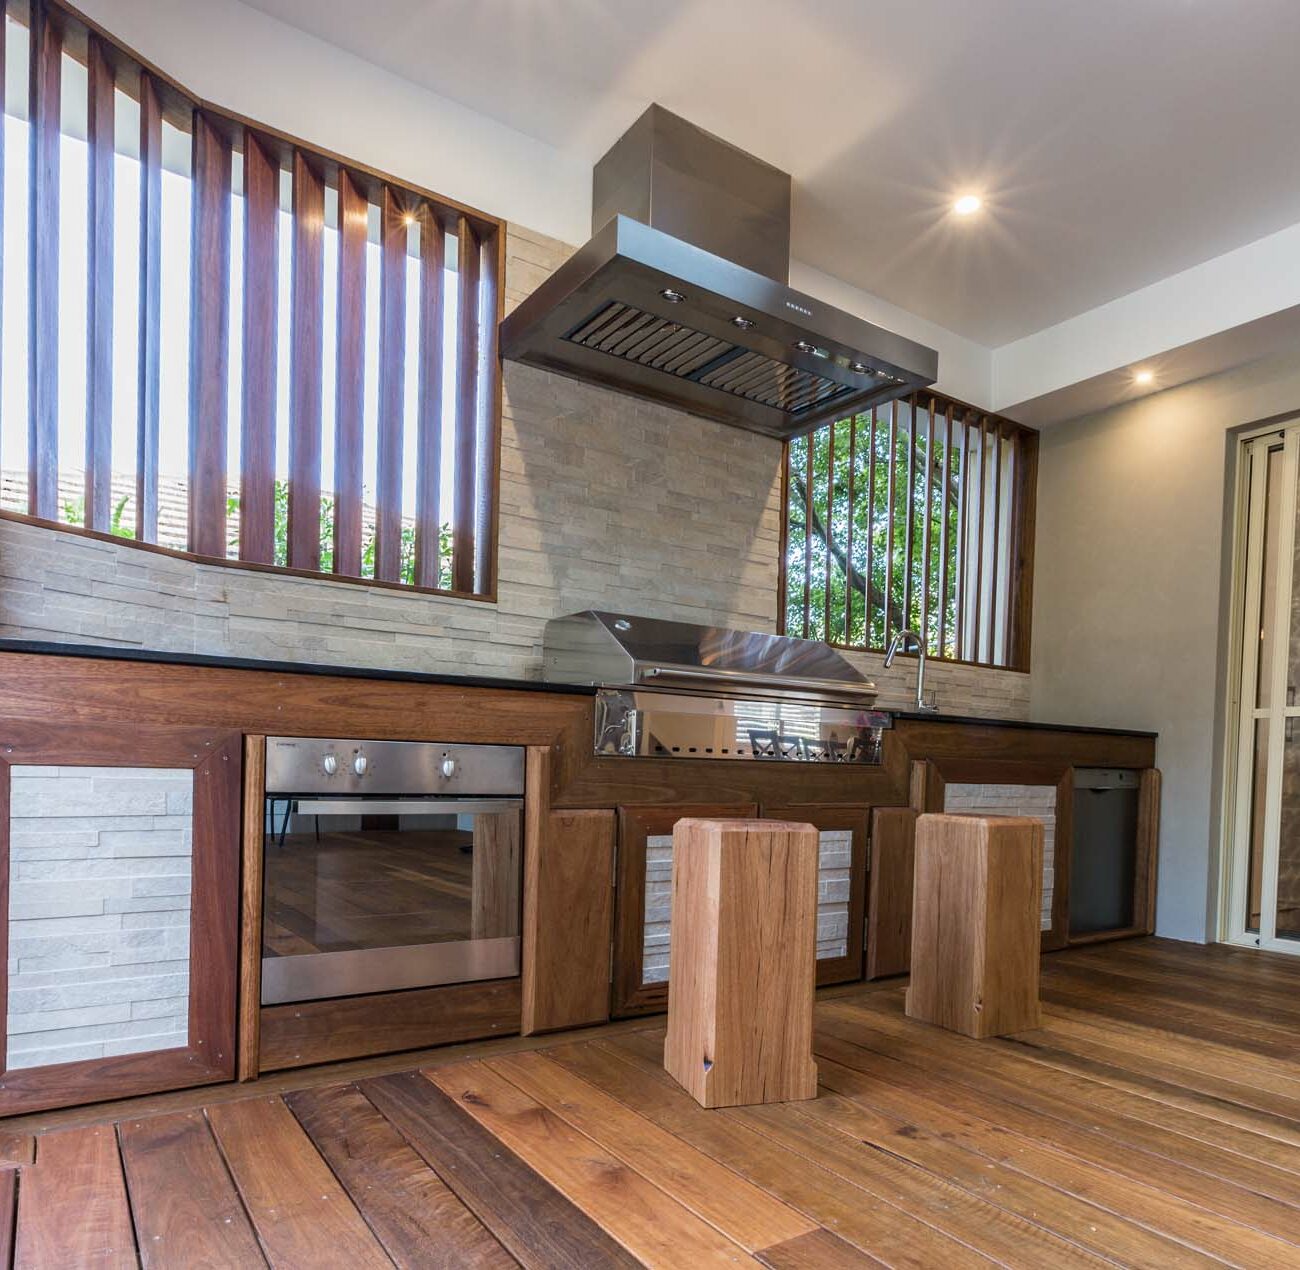 Hornsby Custom home - kitchen interior